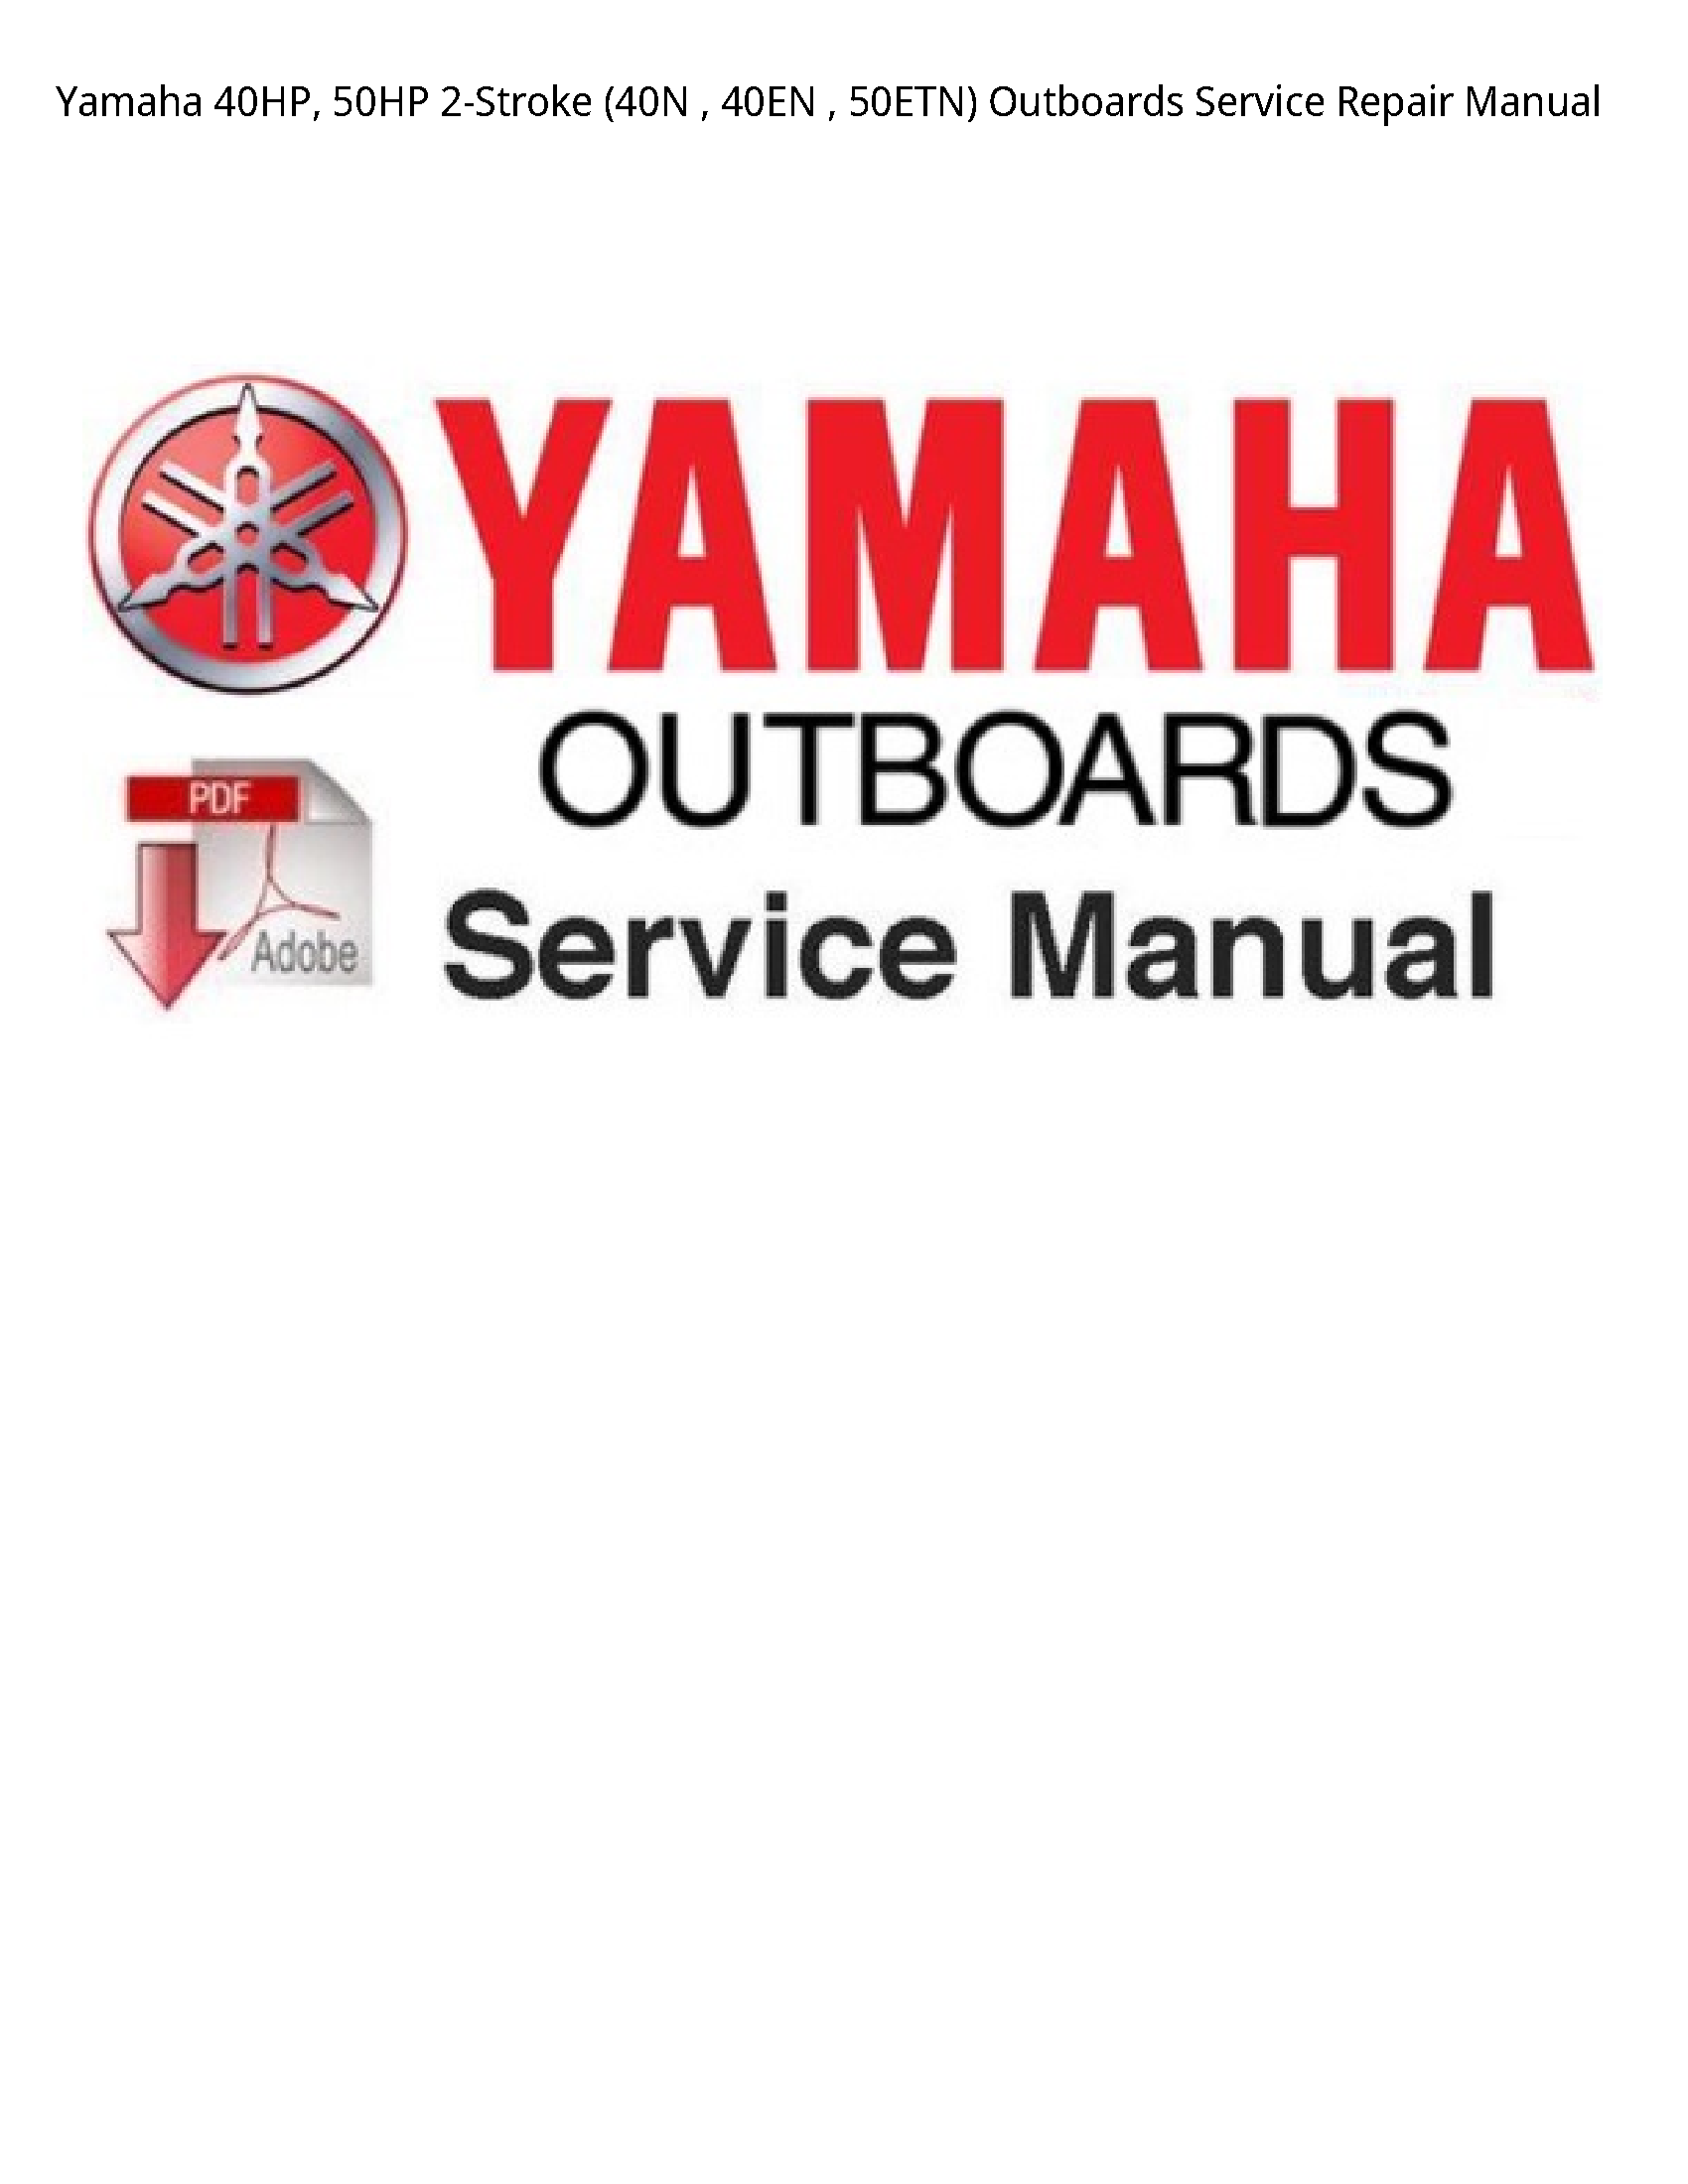 Yamaha 40HP Outboards manual